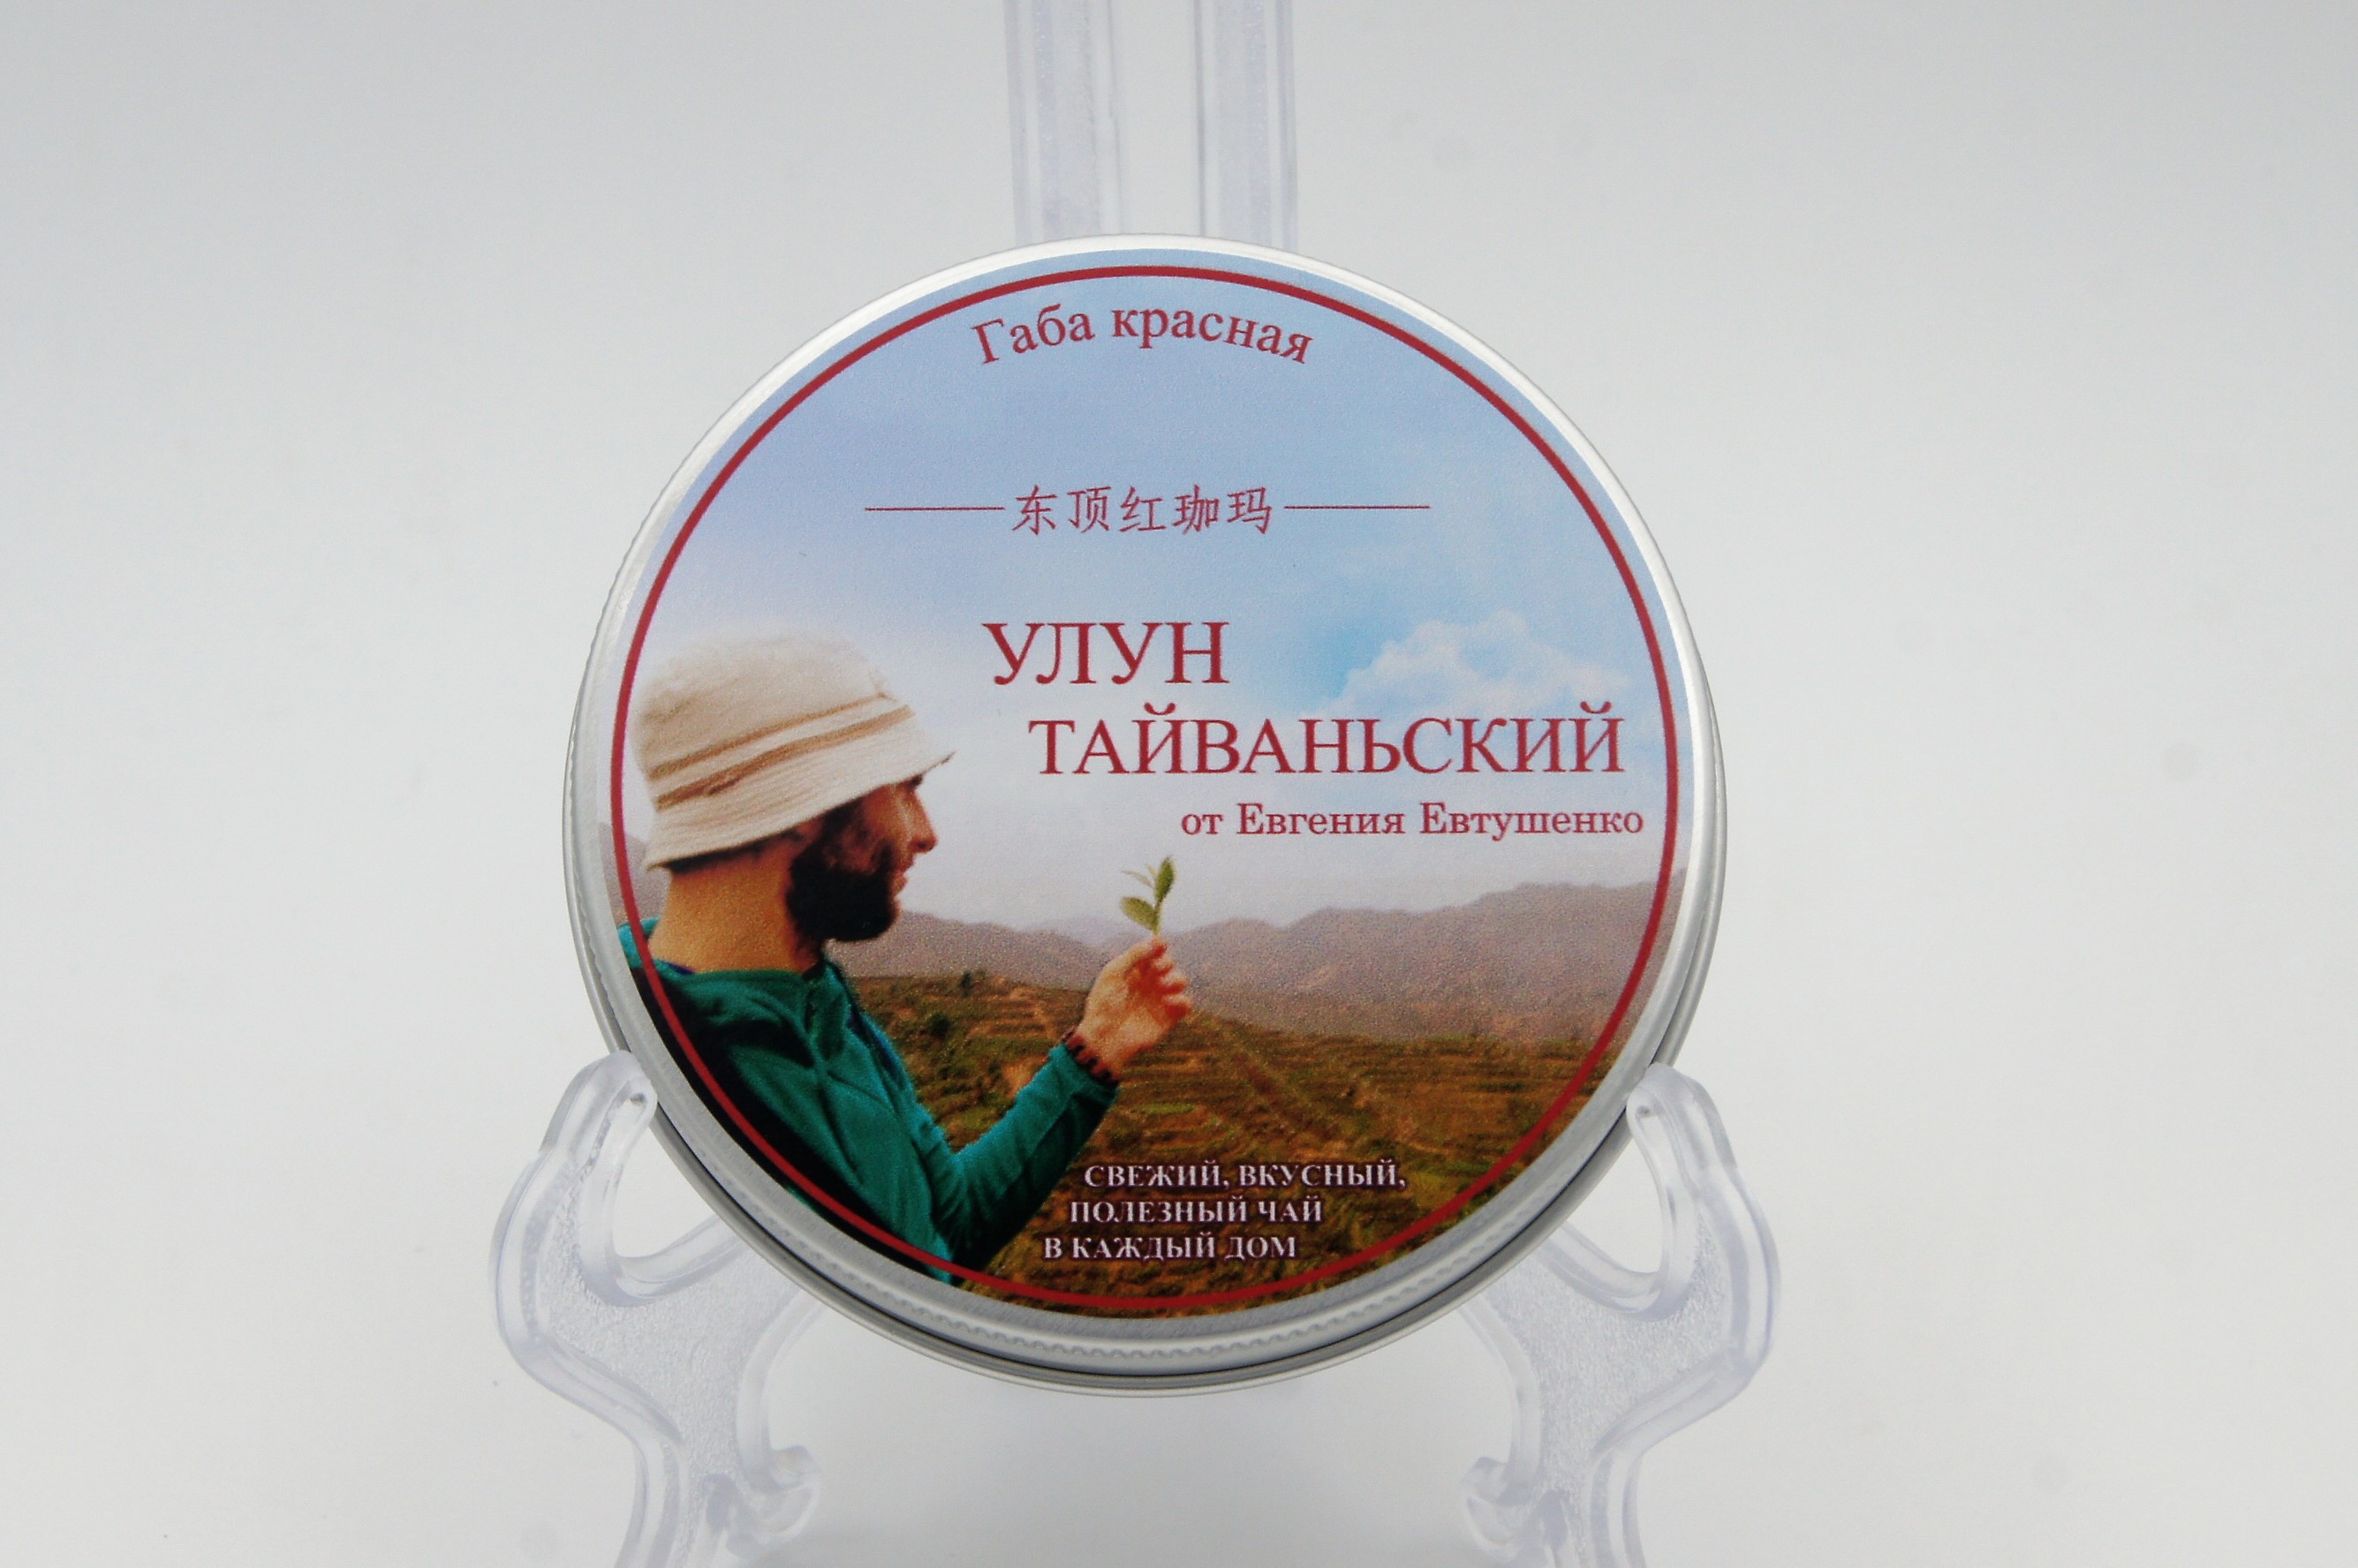 Чай Тайваньский,  Чай от Евгения Евтушенко улун,  габа красная, банка 50 гр.